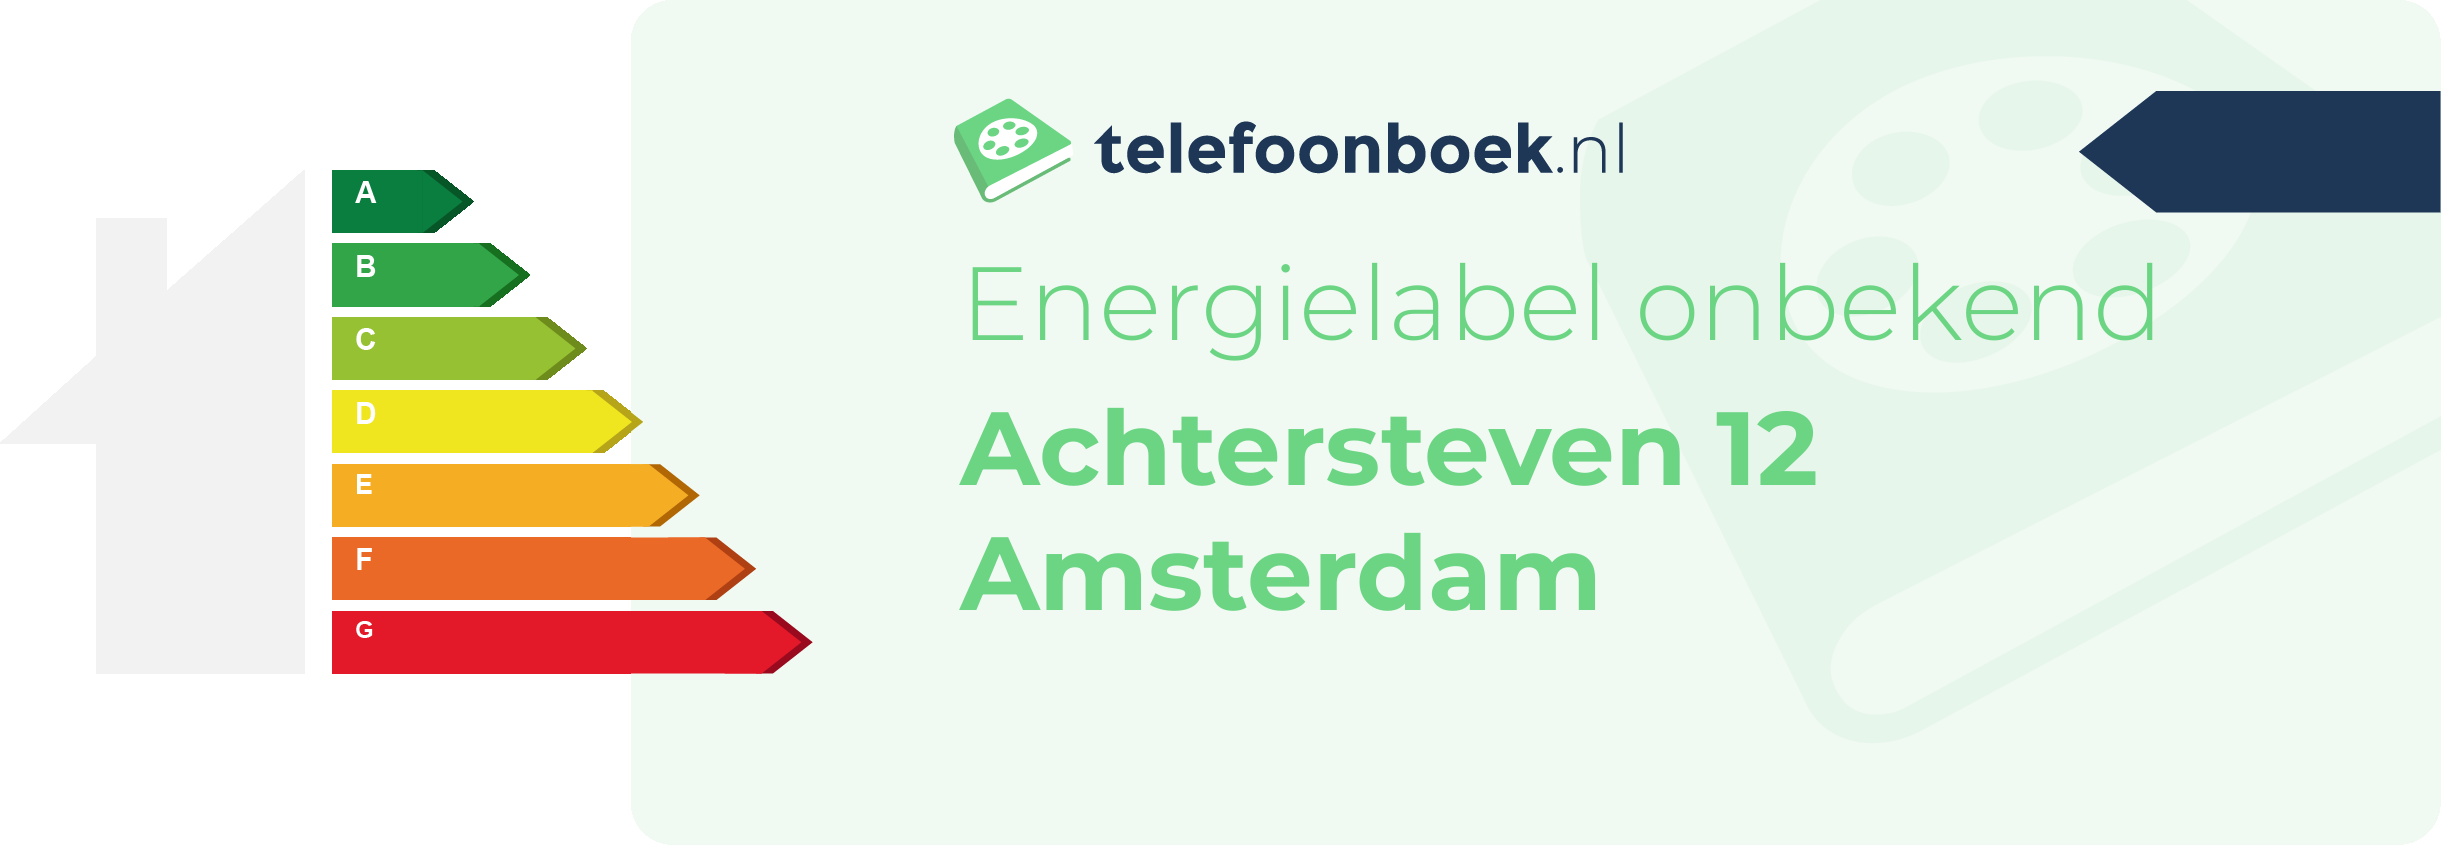 Energielabel Achtersteven 12 Amsterdam